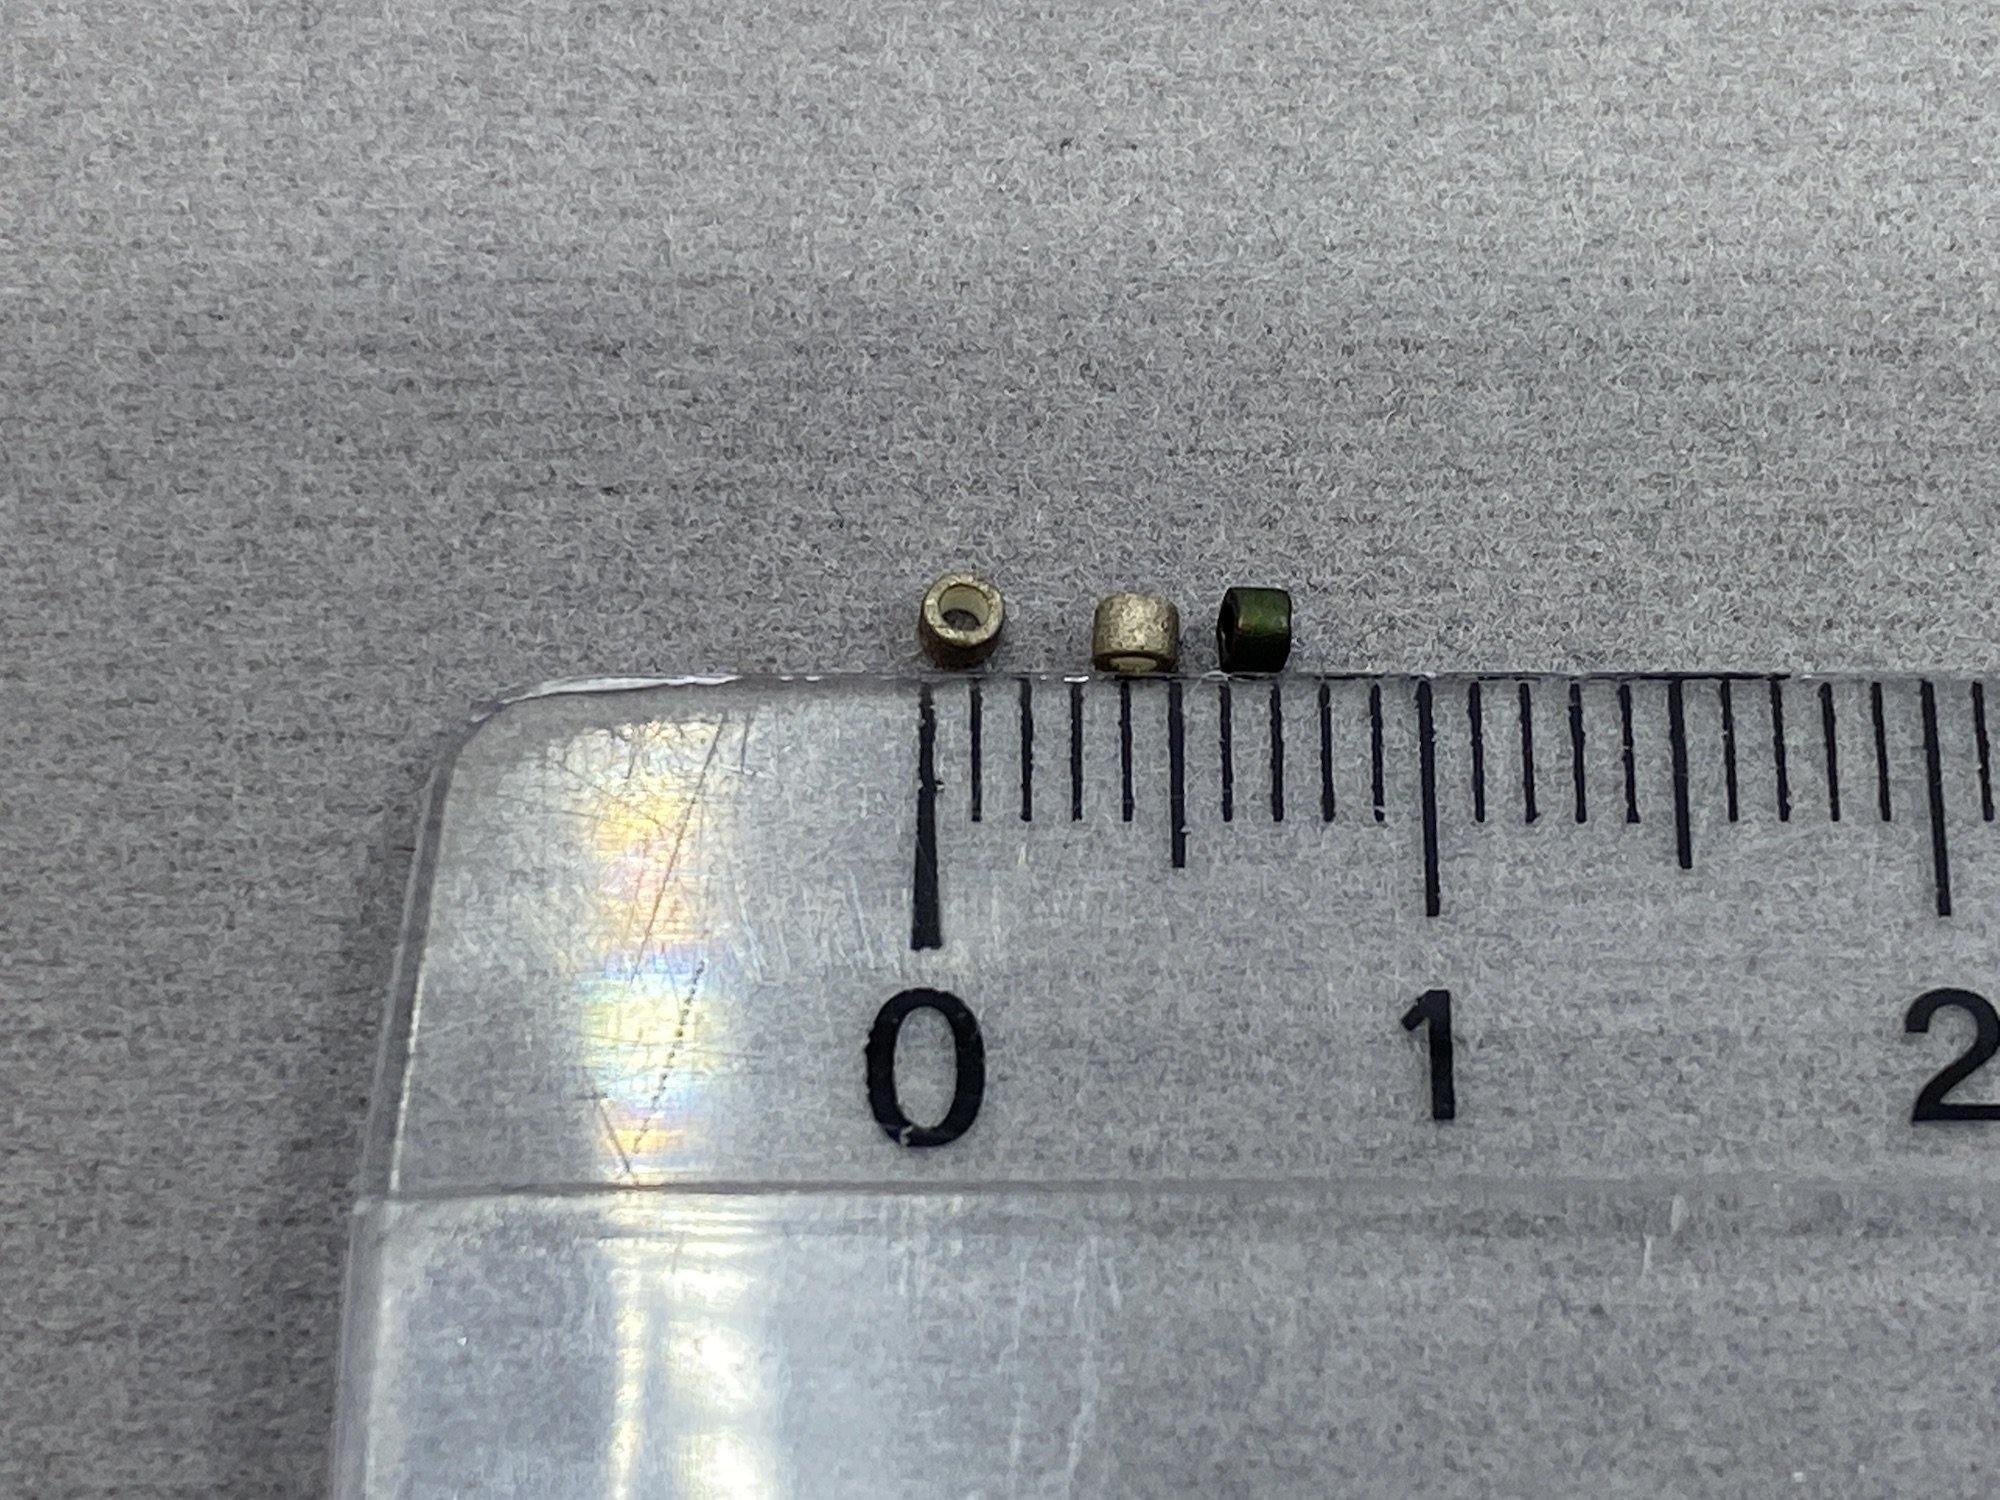 Perles de verre Delica 11/0 - Mélange de soie d'automne